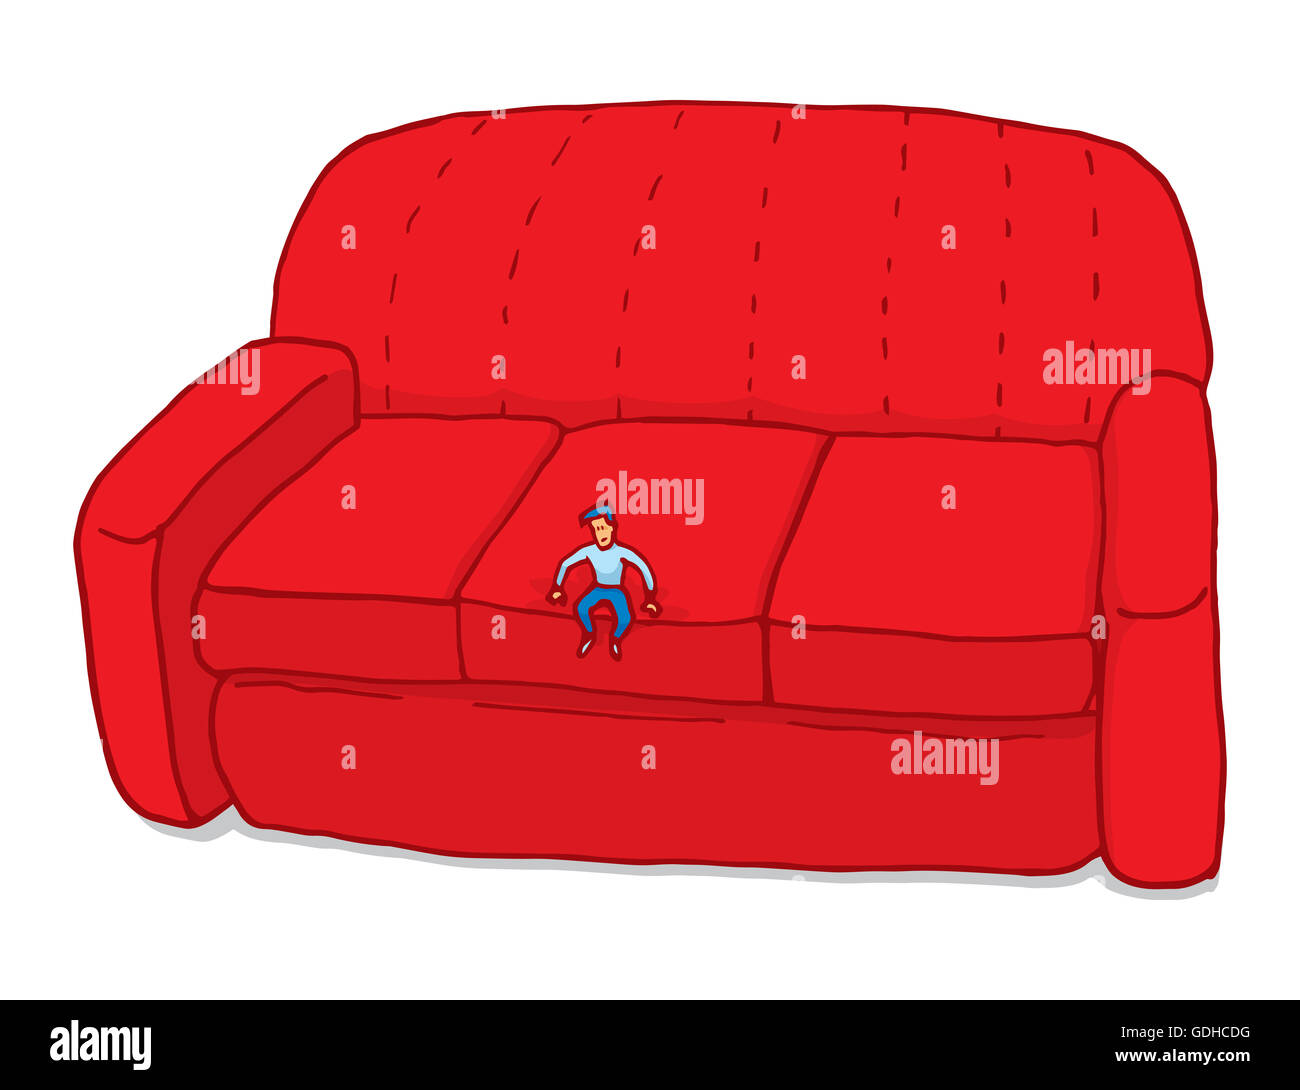 Cartoon illustration of miniature man feeling small on couch Stock Photo